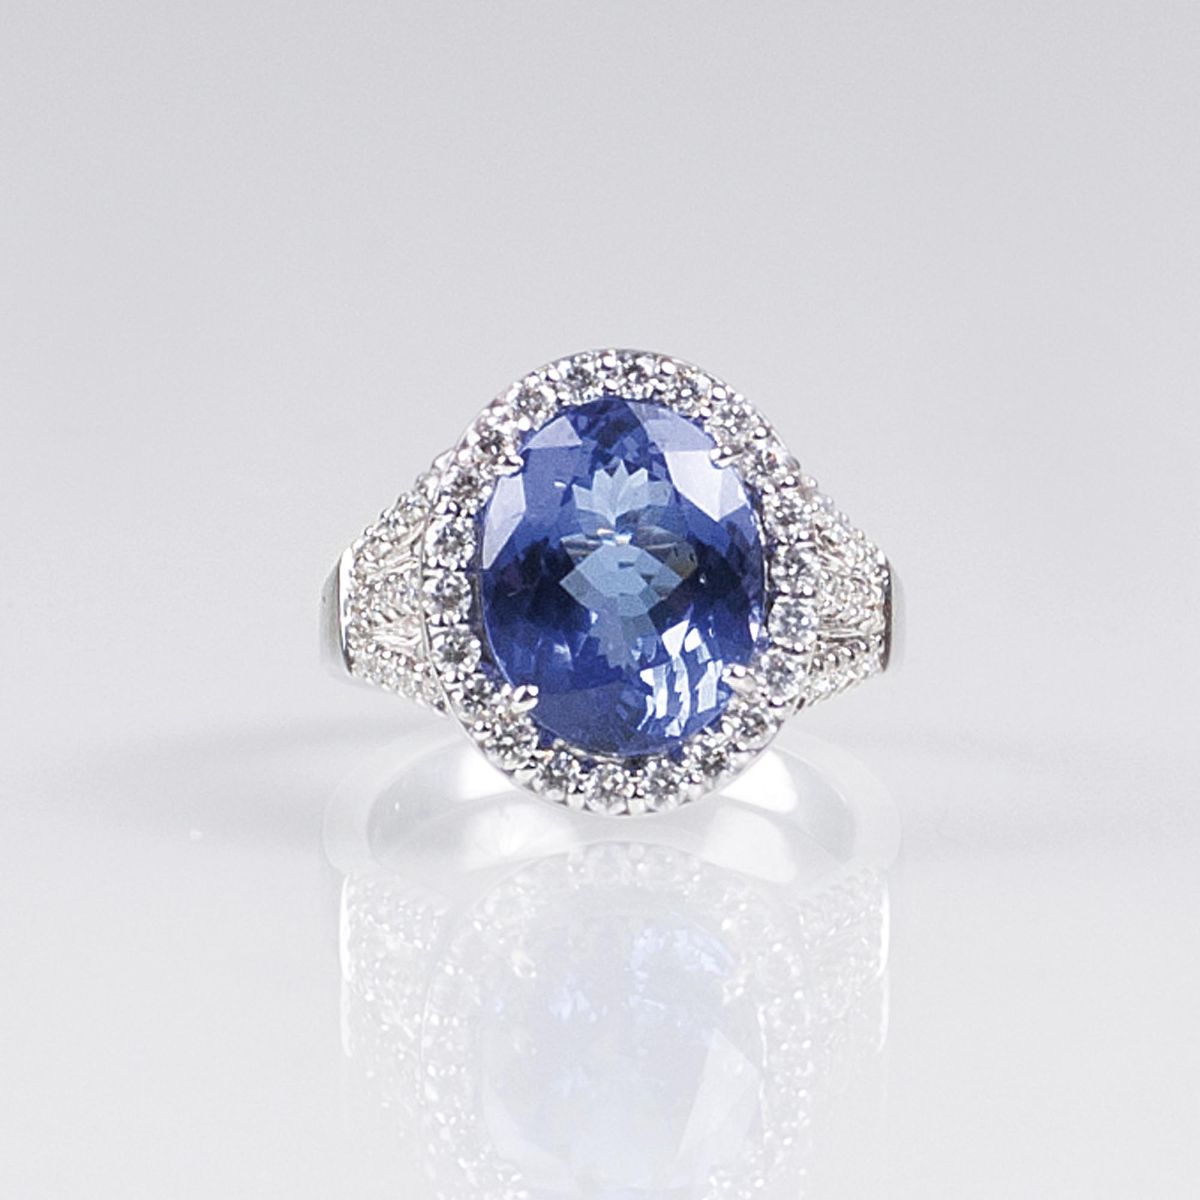 A classical elegant Tanzanite Diamond Ring